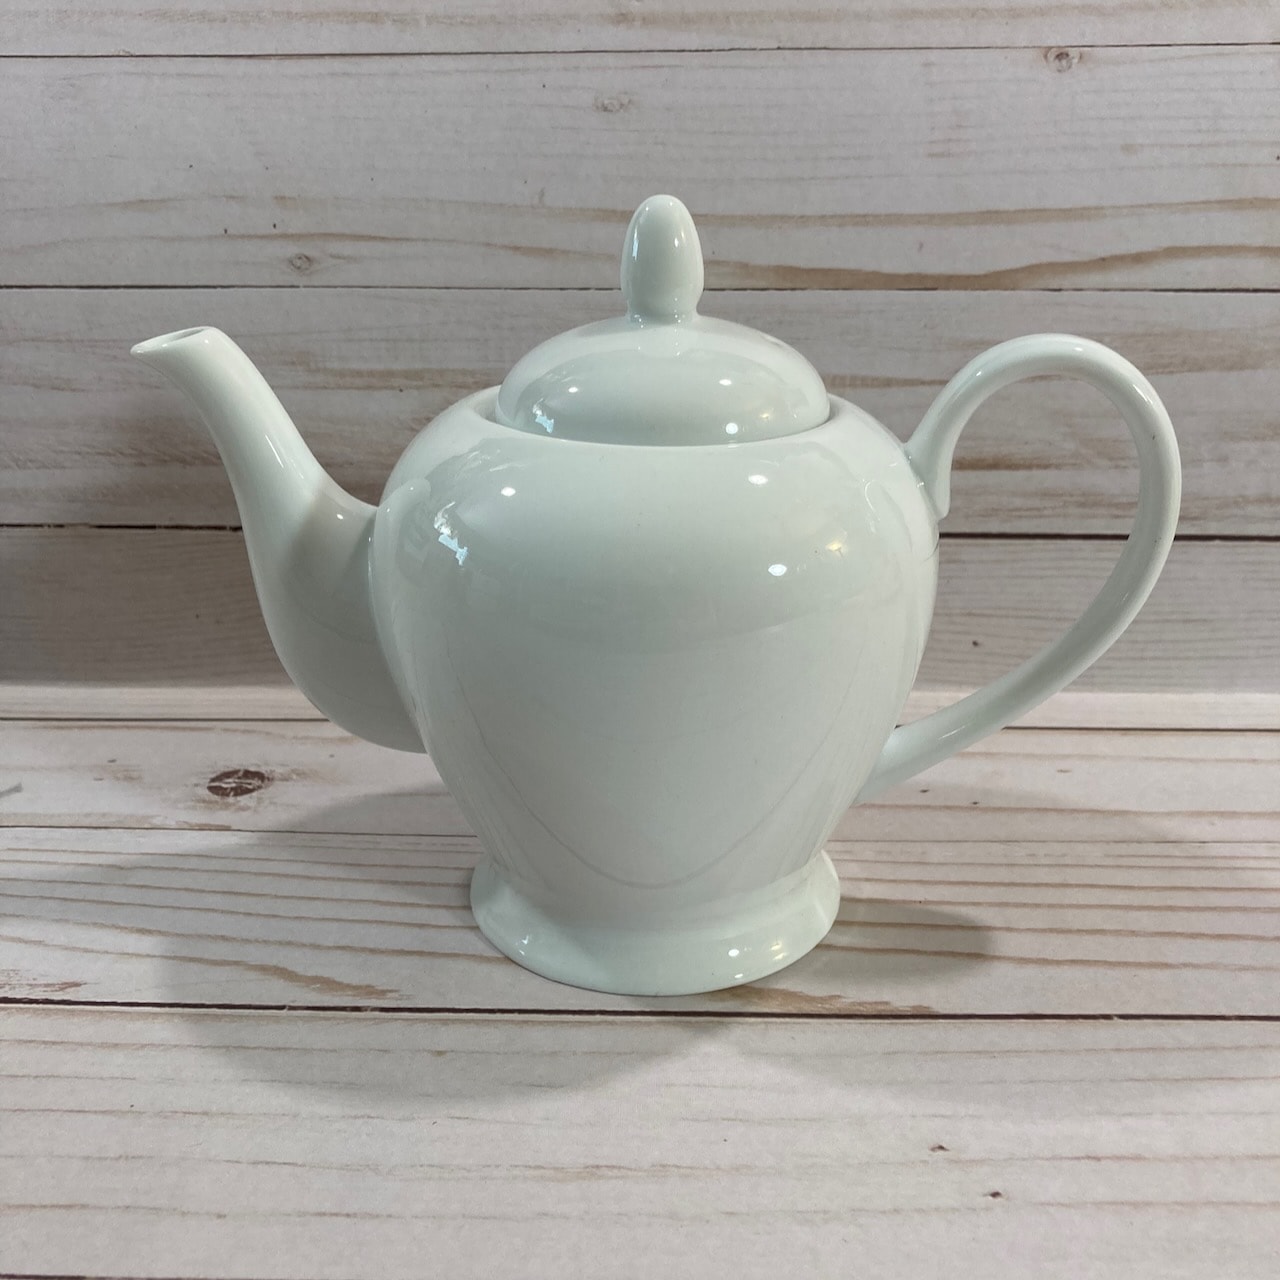 https://www.teaforallreasons.com/wp-content/uploads/2022/06/Small-White-Teapot.jpeg